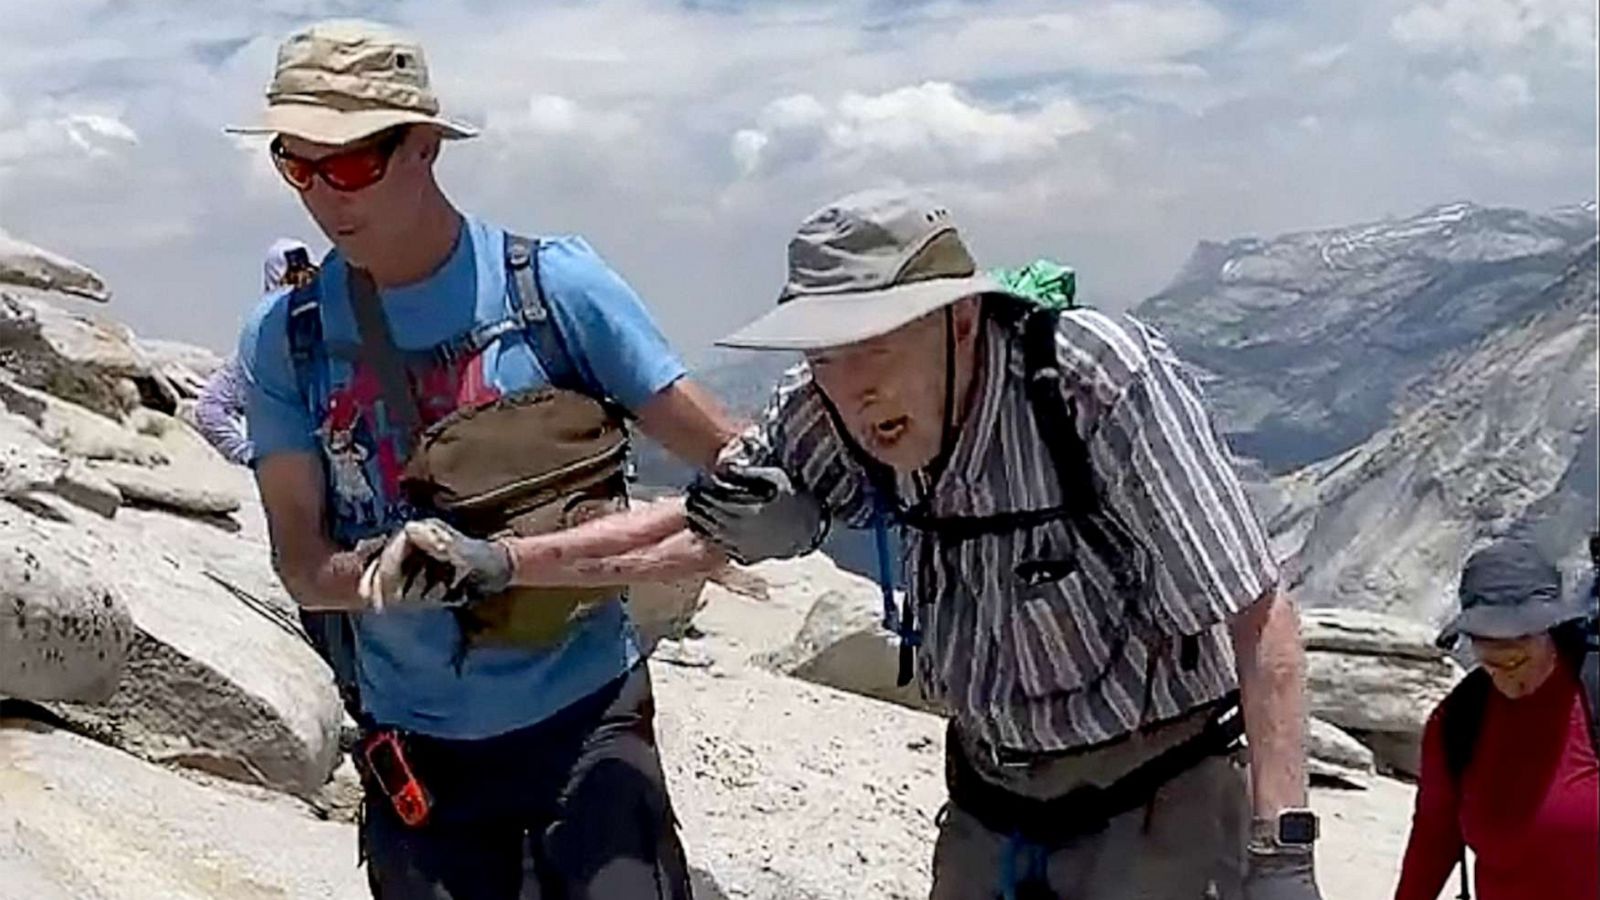 93-year-old summits Yosemite's Half Dome: 'It felt pretty good